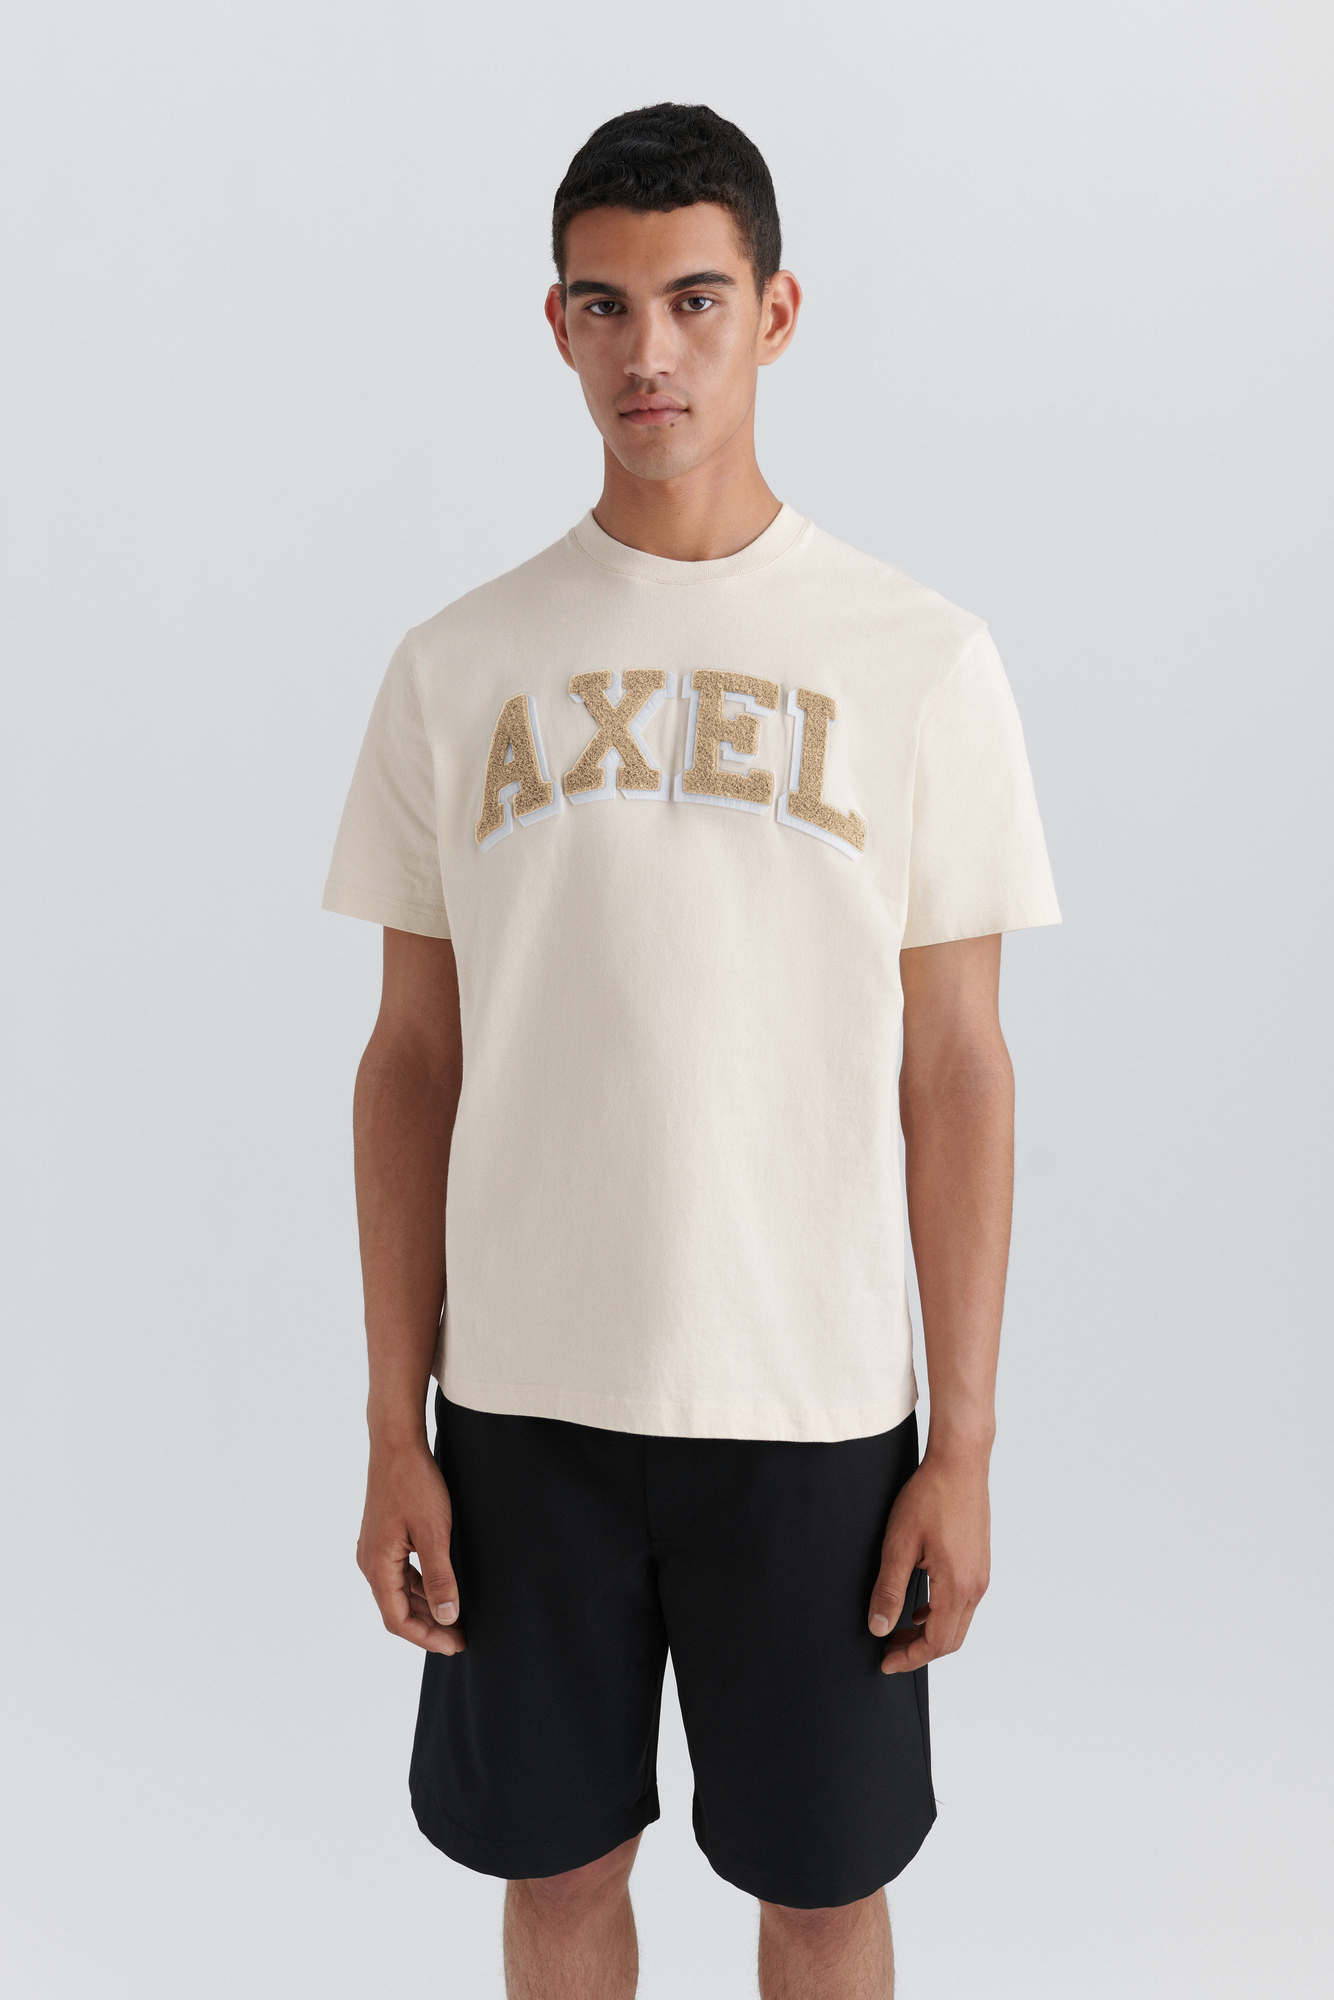 Axel Arc T-Shirt